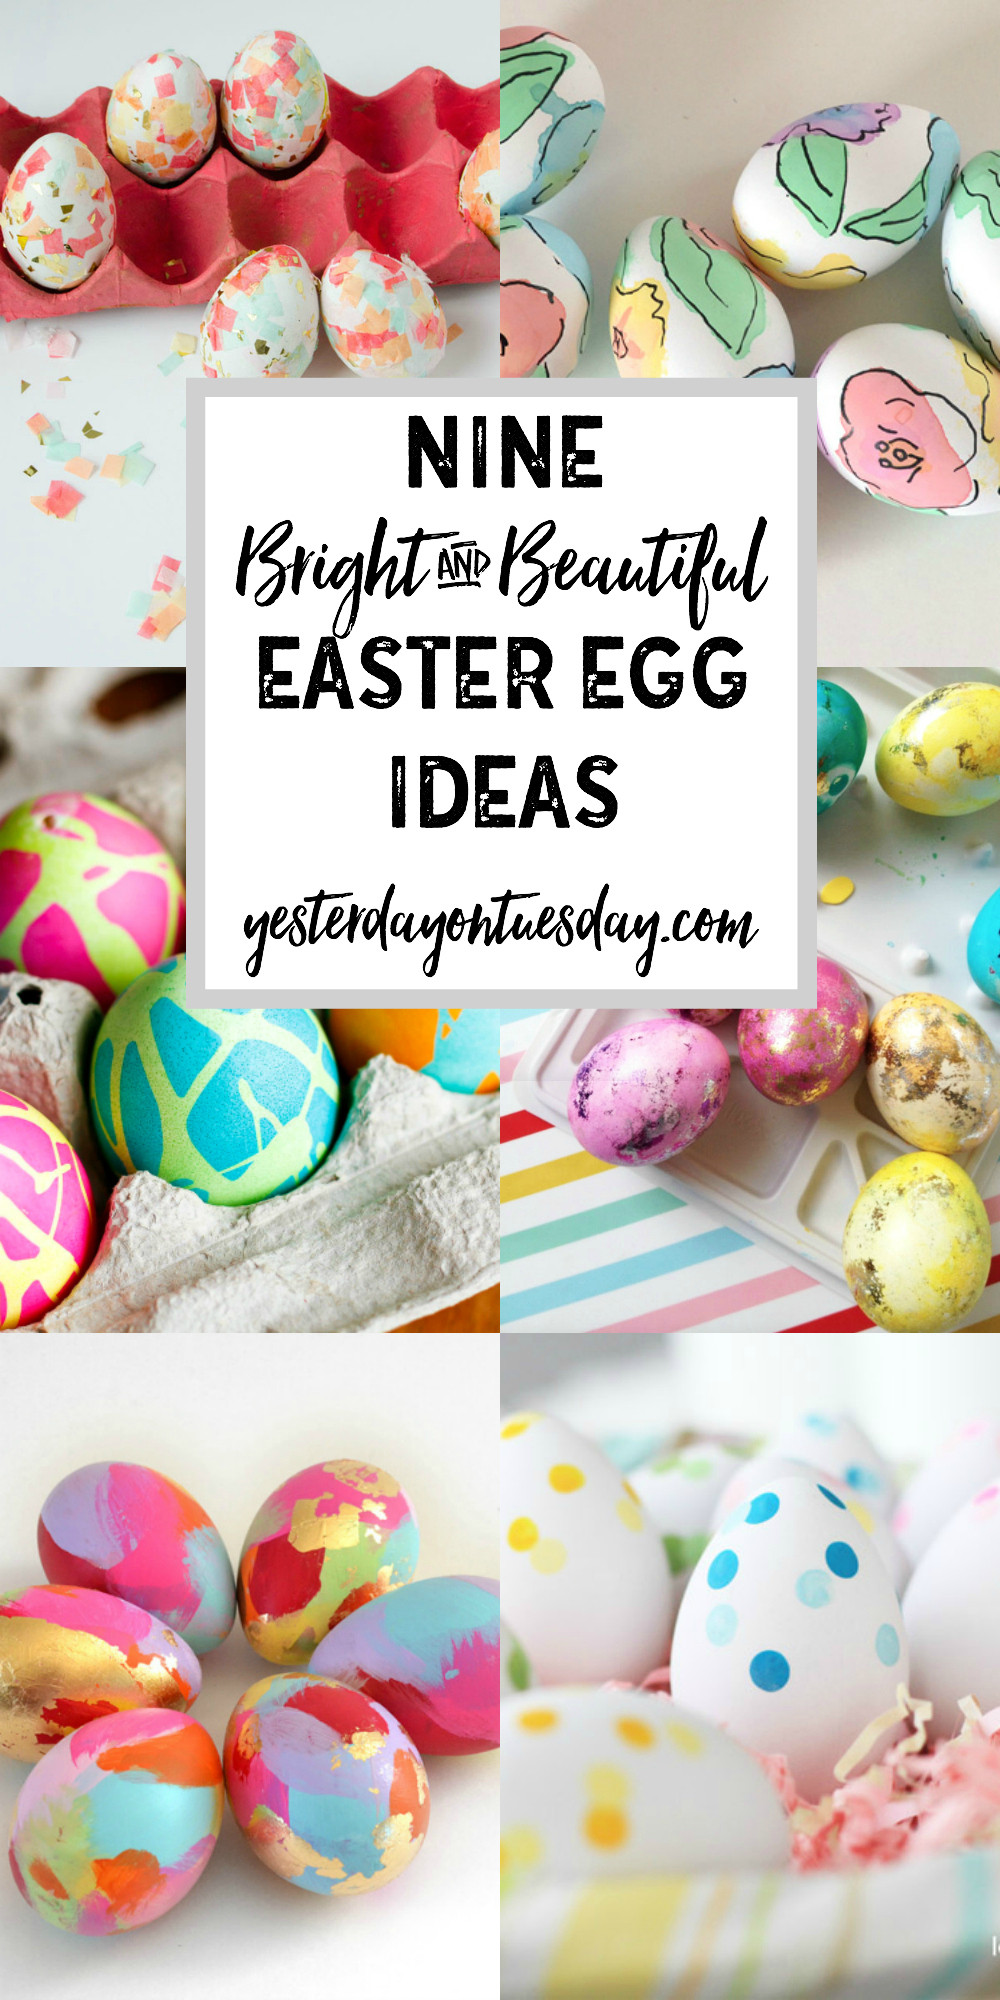 Easter Pinterest Ideas
 Adorable Easter Bunny Ideas